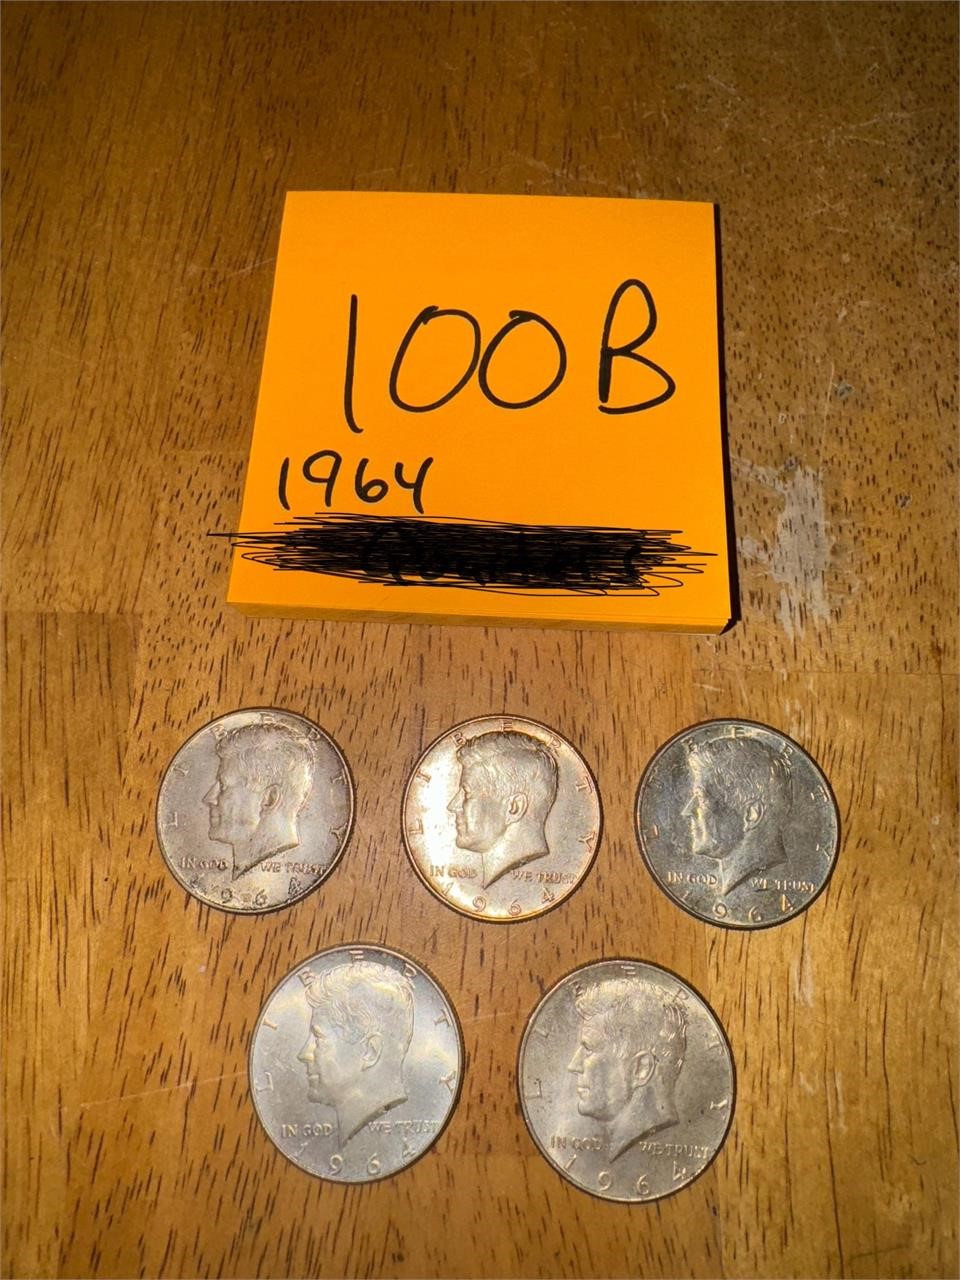 5 1964 silver Half Dollars